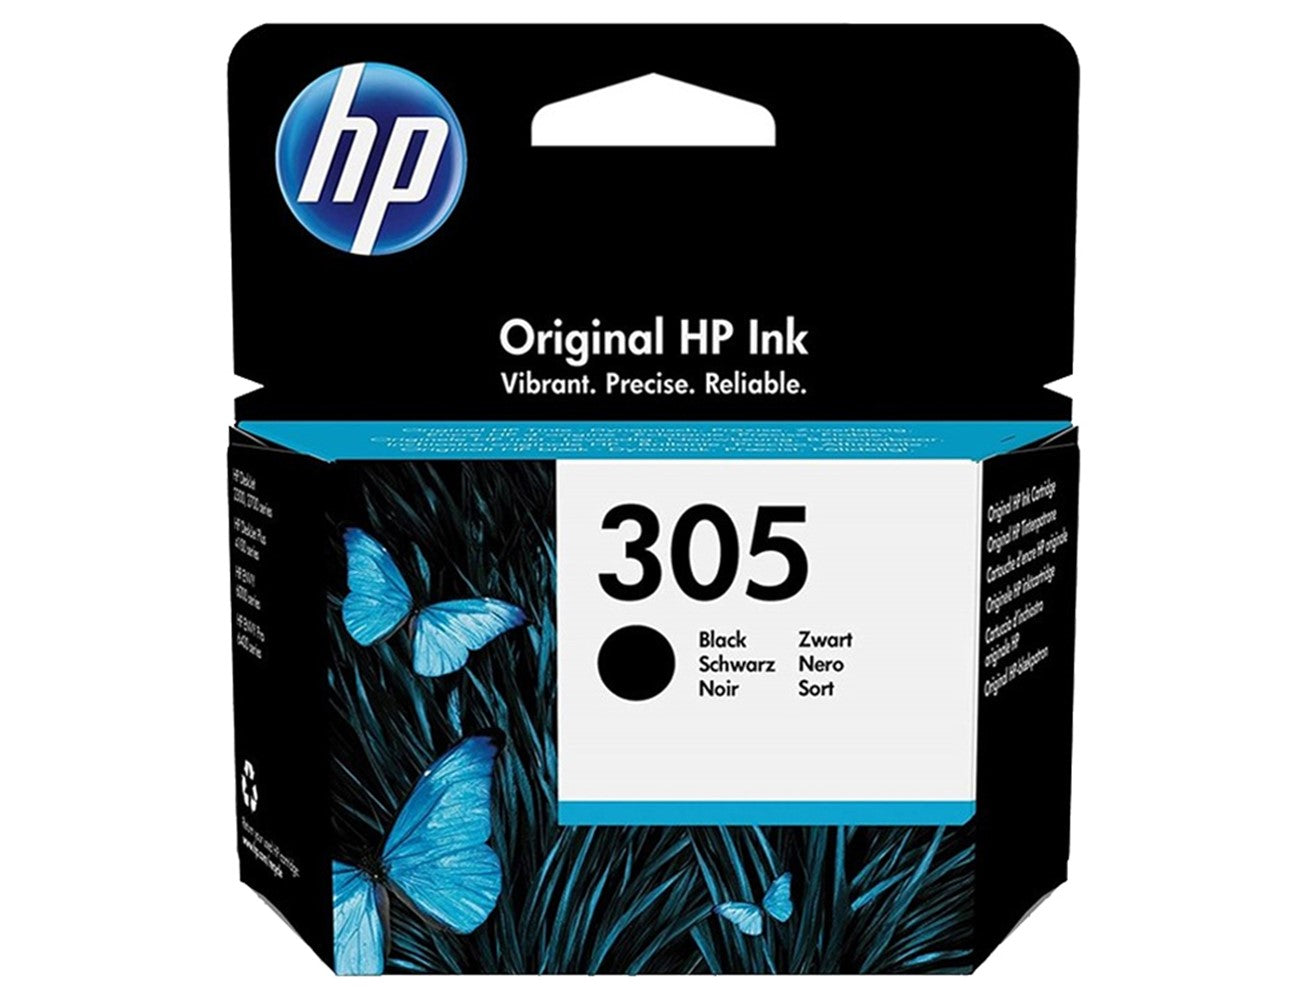 HP 305 Original Ink Cartridge - Black